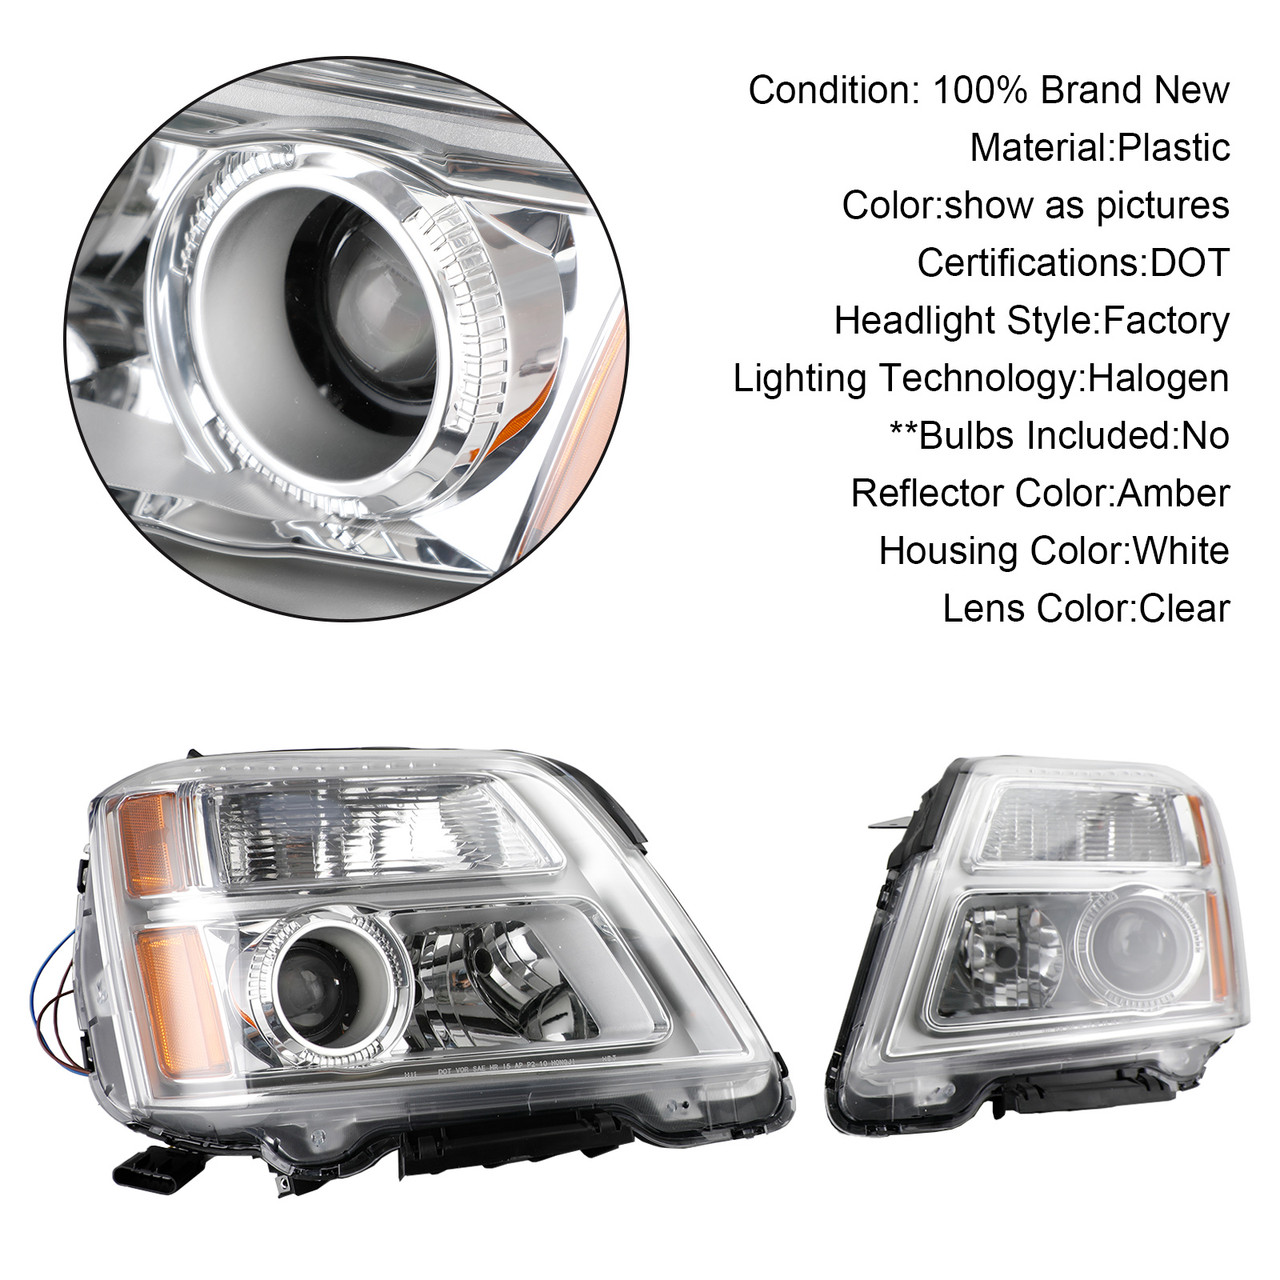 GMC Terrain 2010-2015 Left+Right Projector Headlights Headlamps